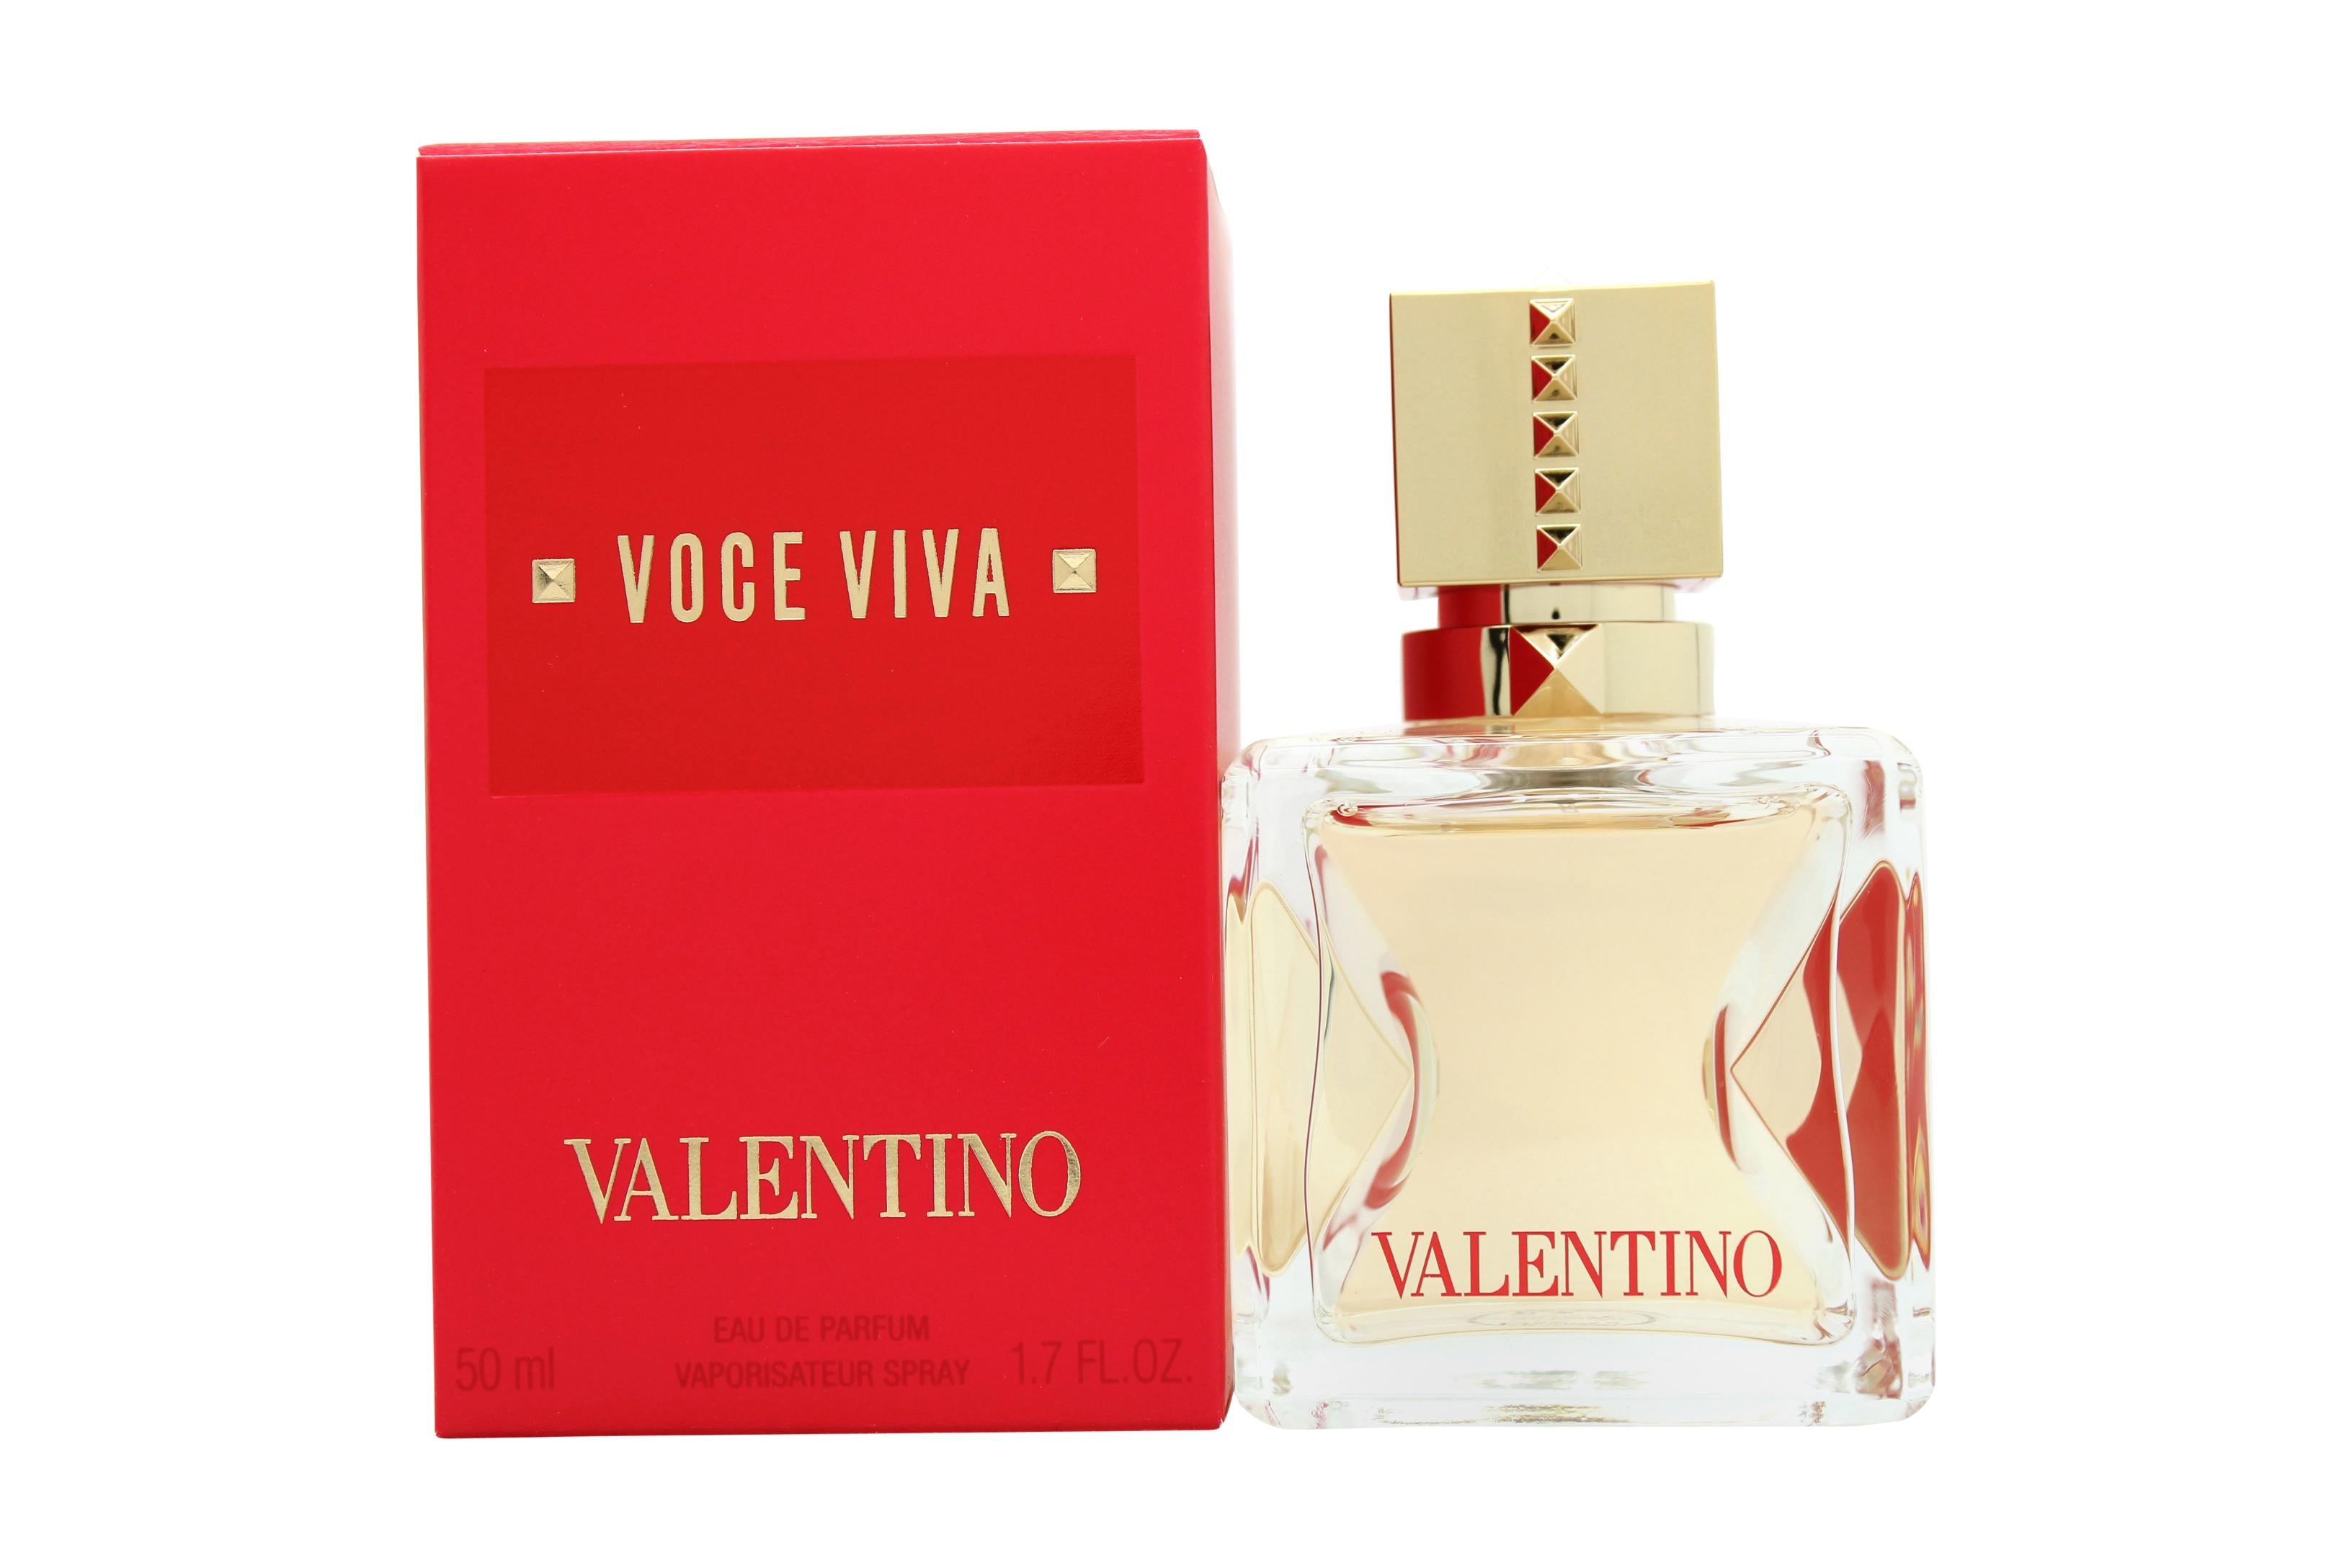 View Valentino Voce Viva Eau de Parfum 50ml Spray information